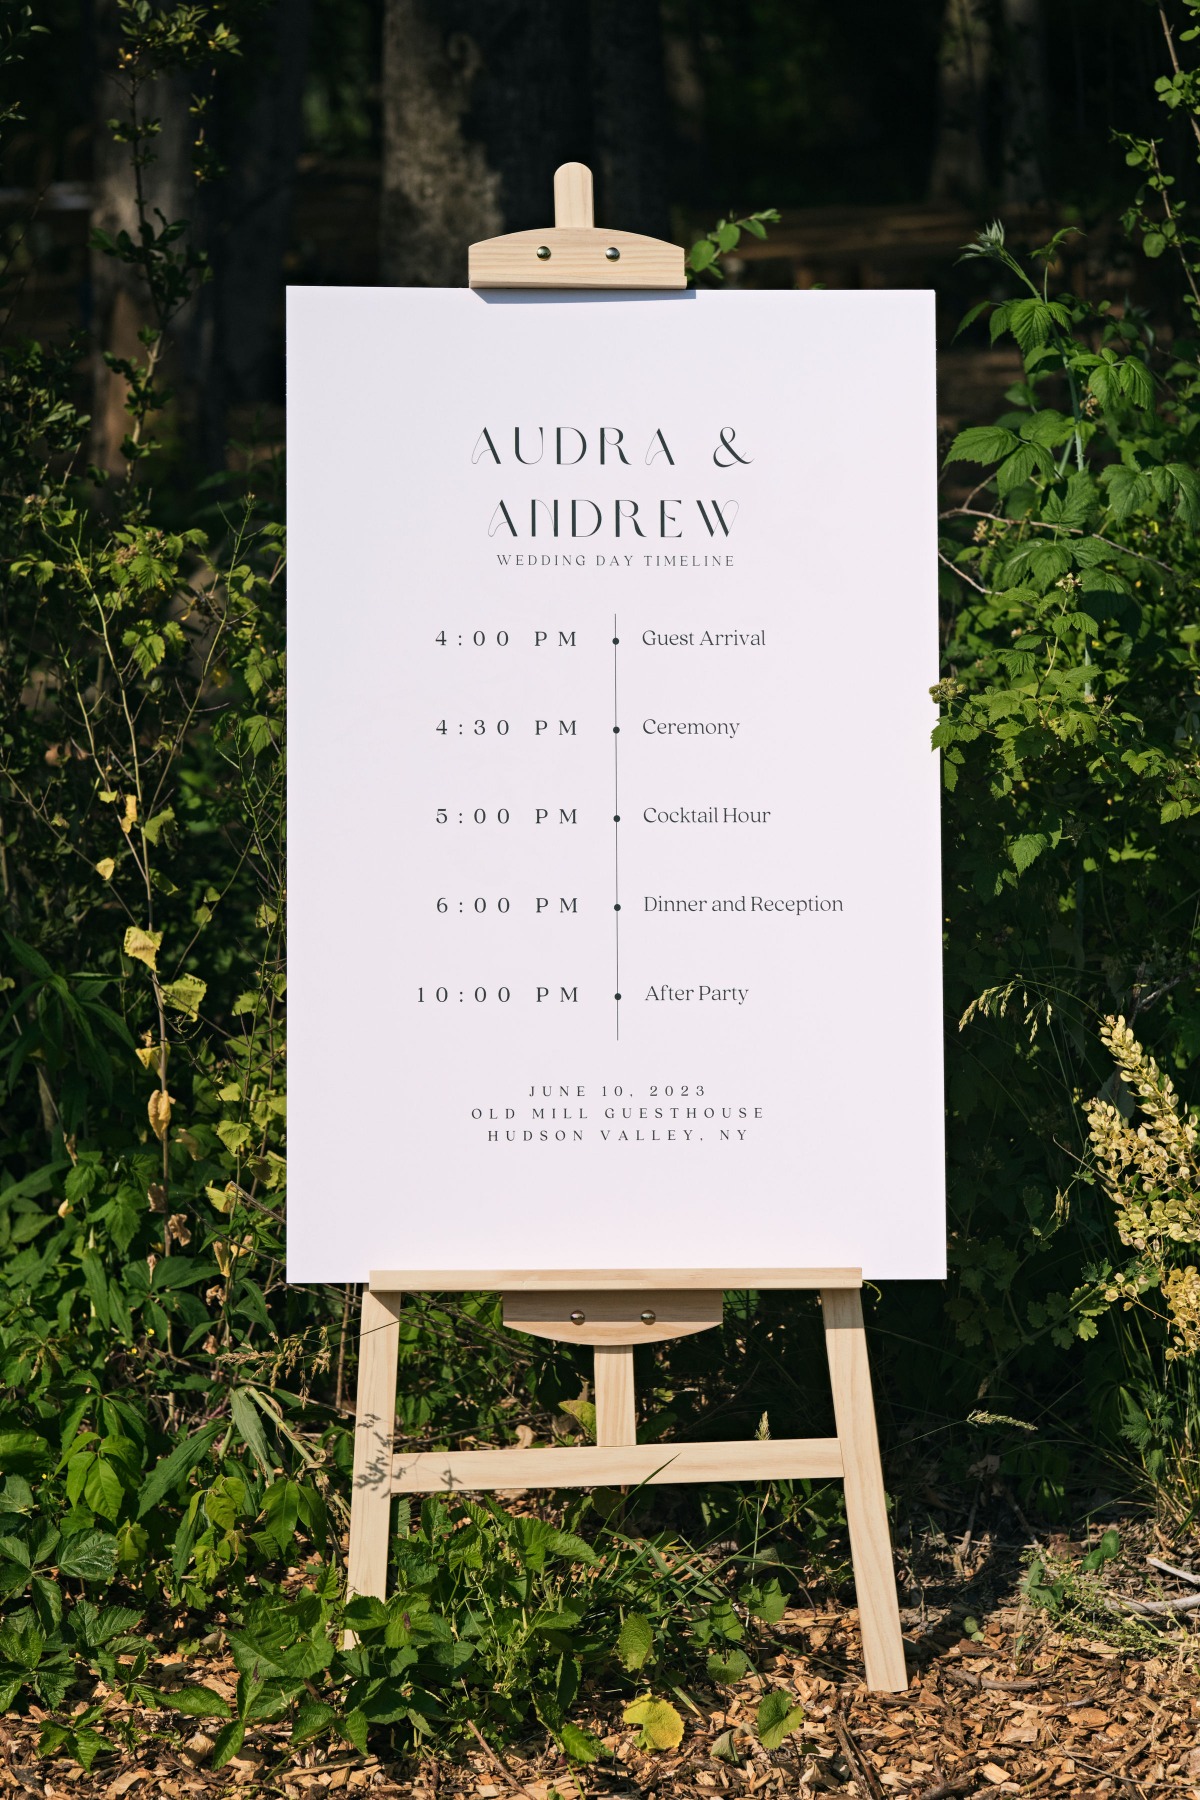 Modern minimalist wedding sign with timeline and agenda